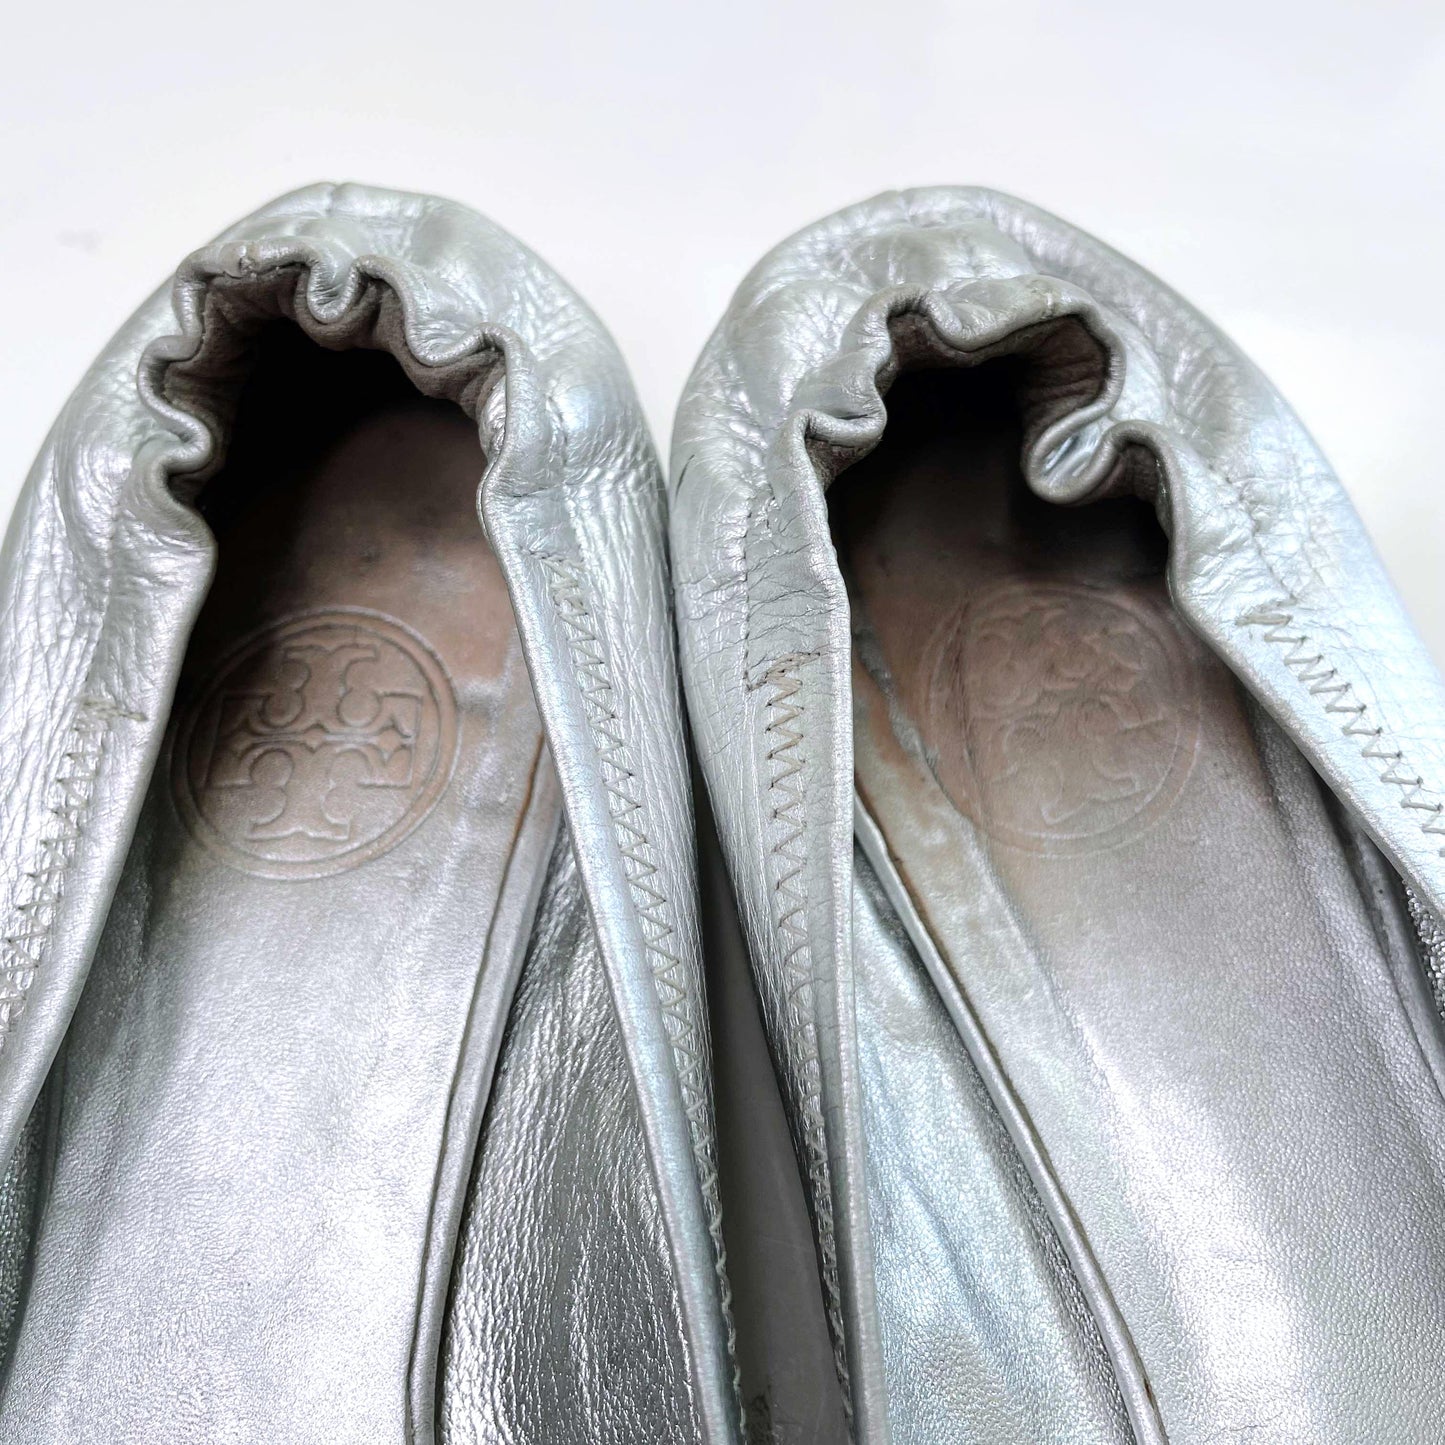 tory burch reva silver metallic ballet flats - size 7